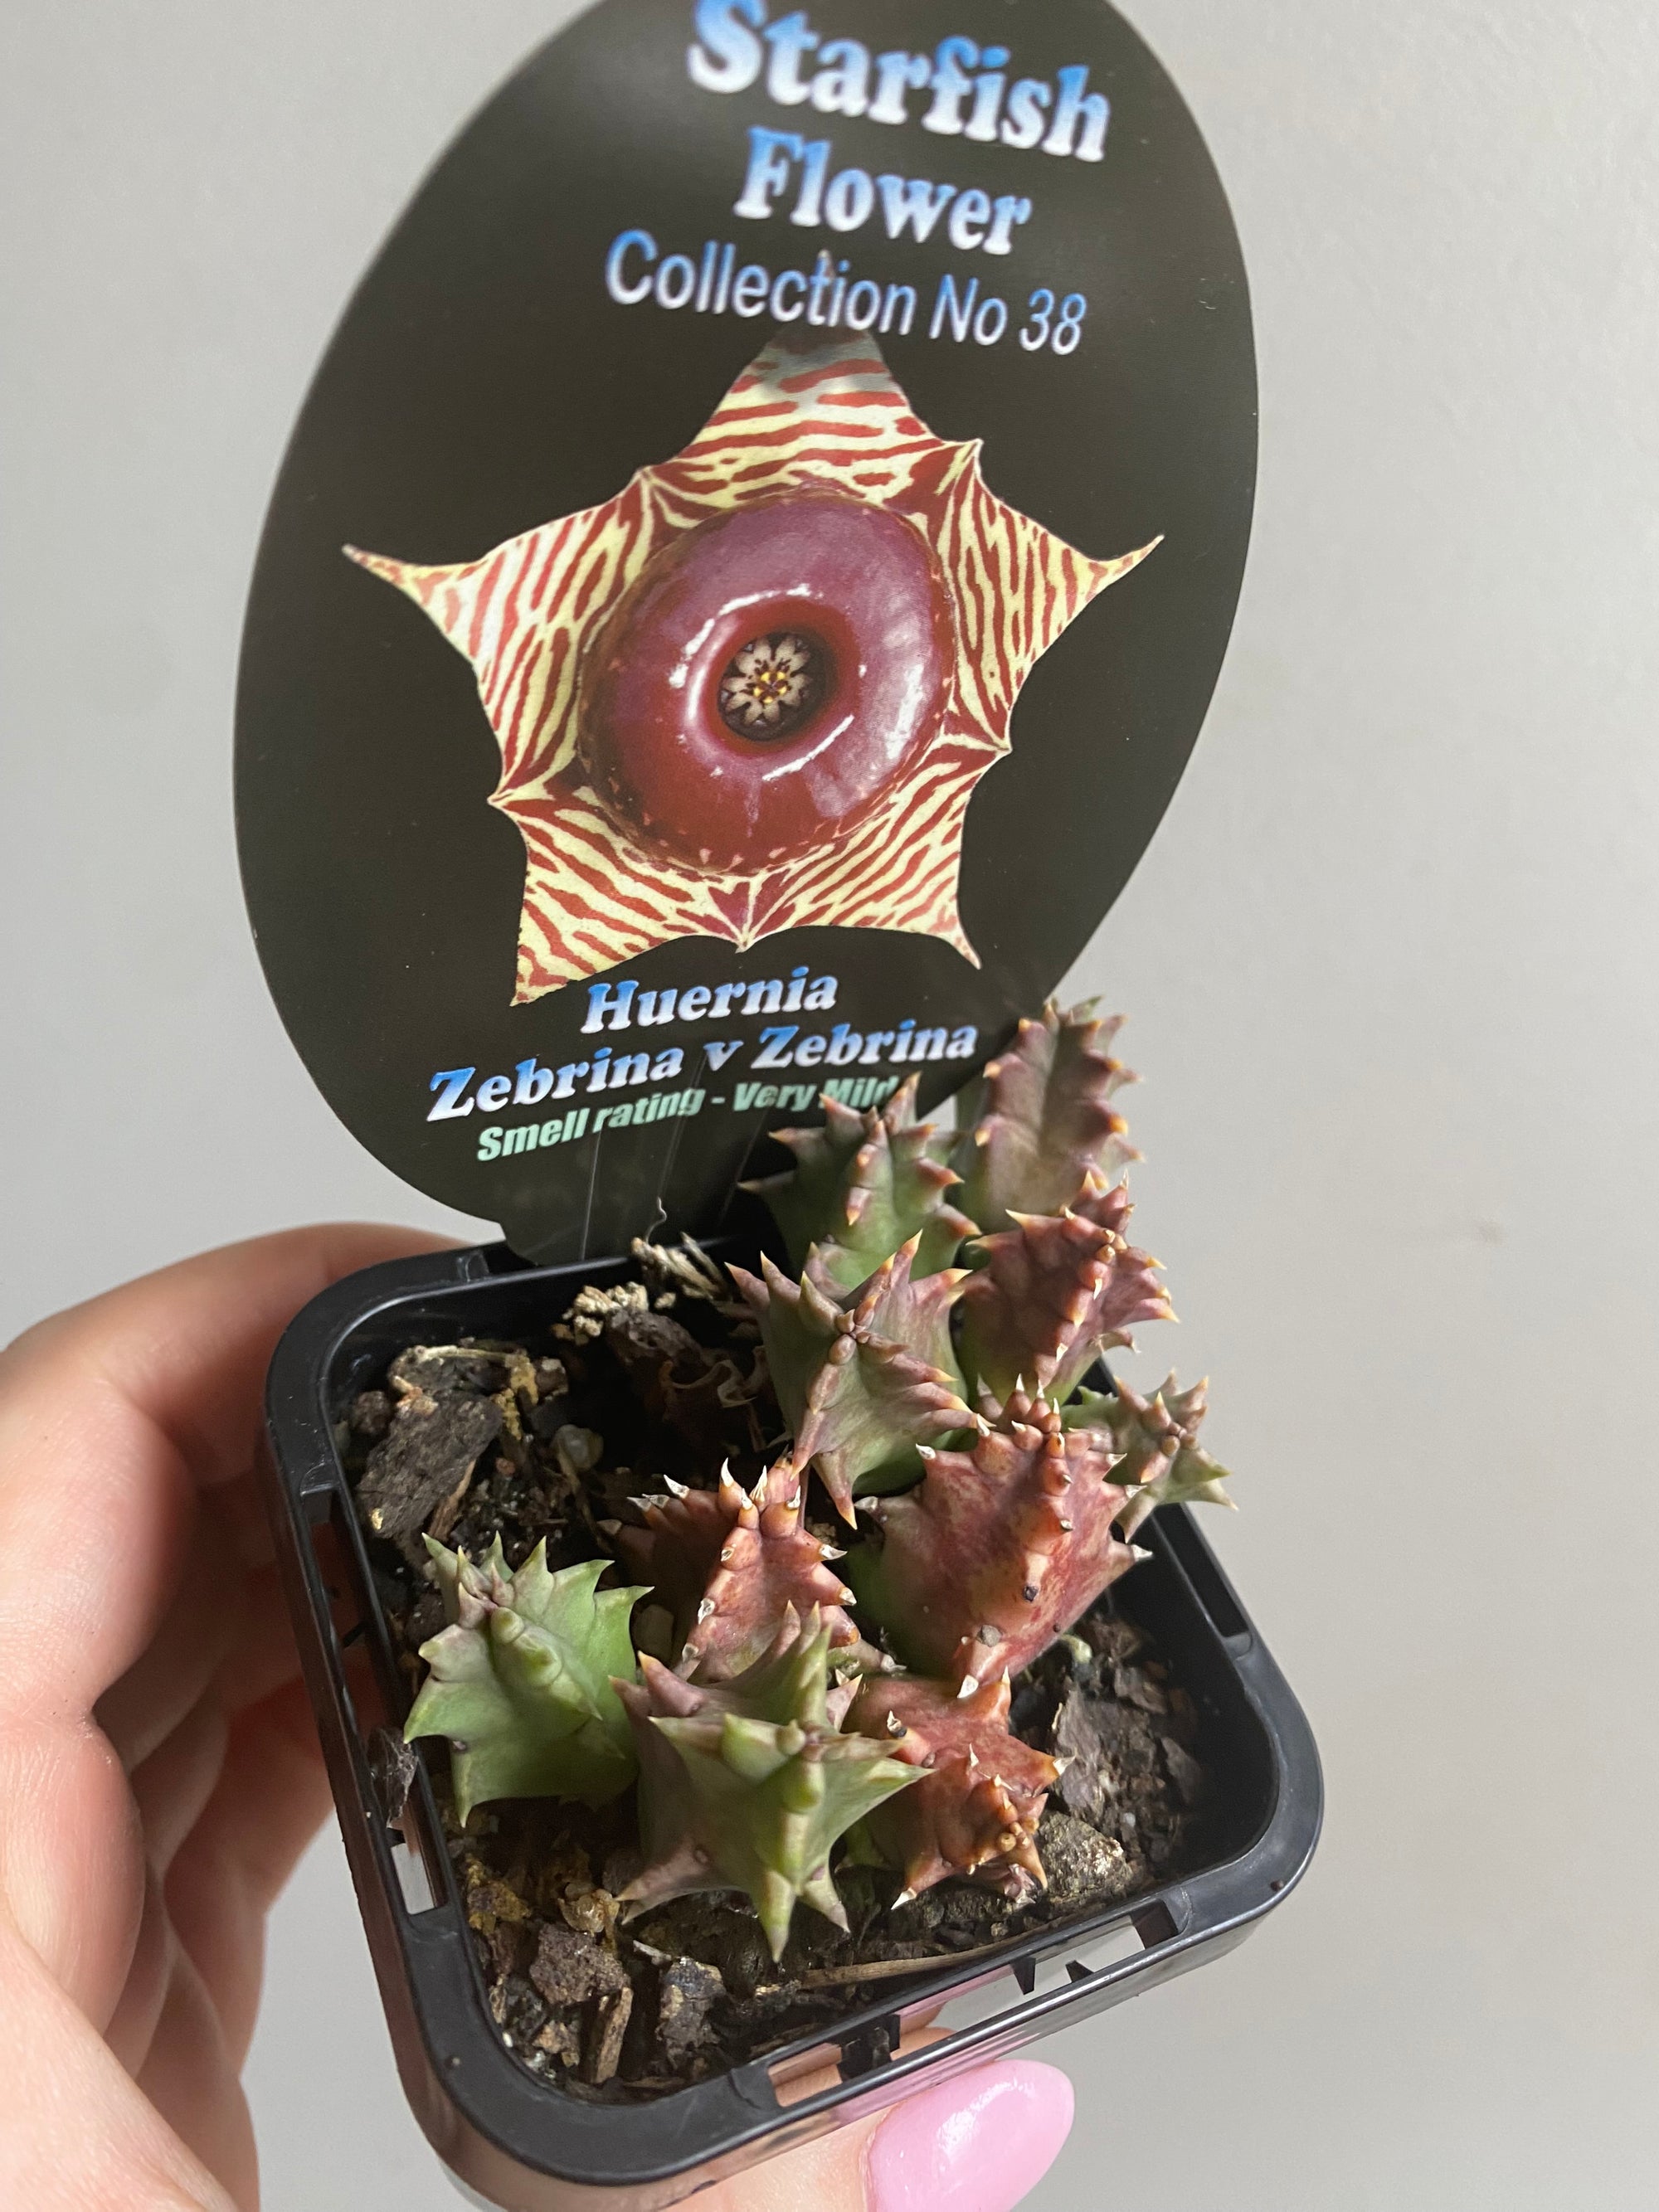 Huernia Zebrina v Zebrina - Starfish Flower Collection No. 38